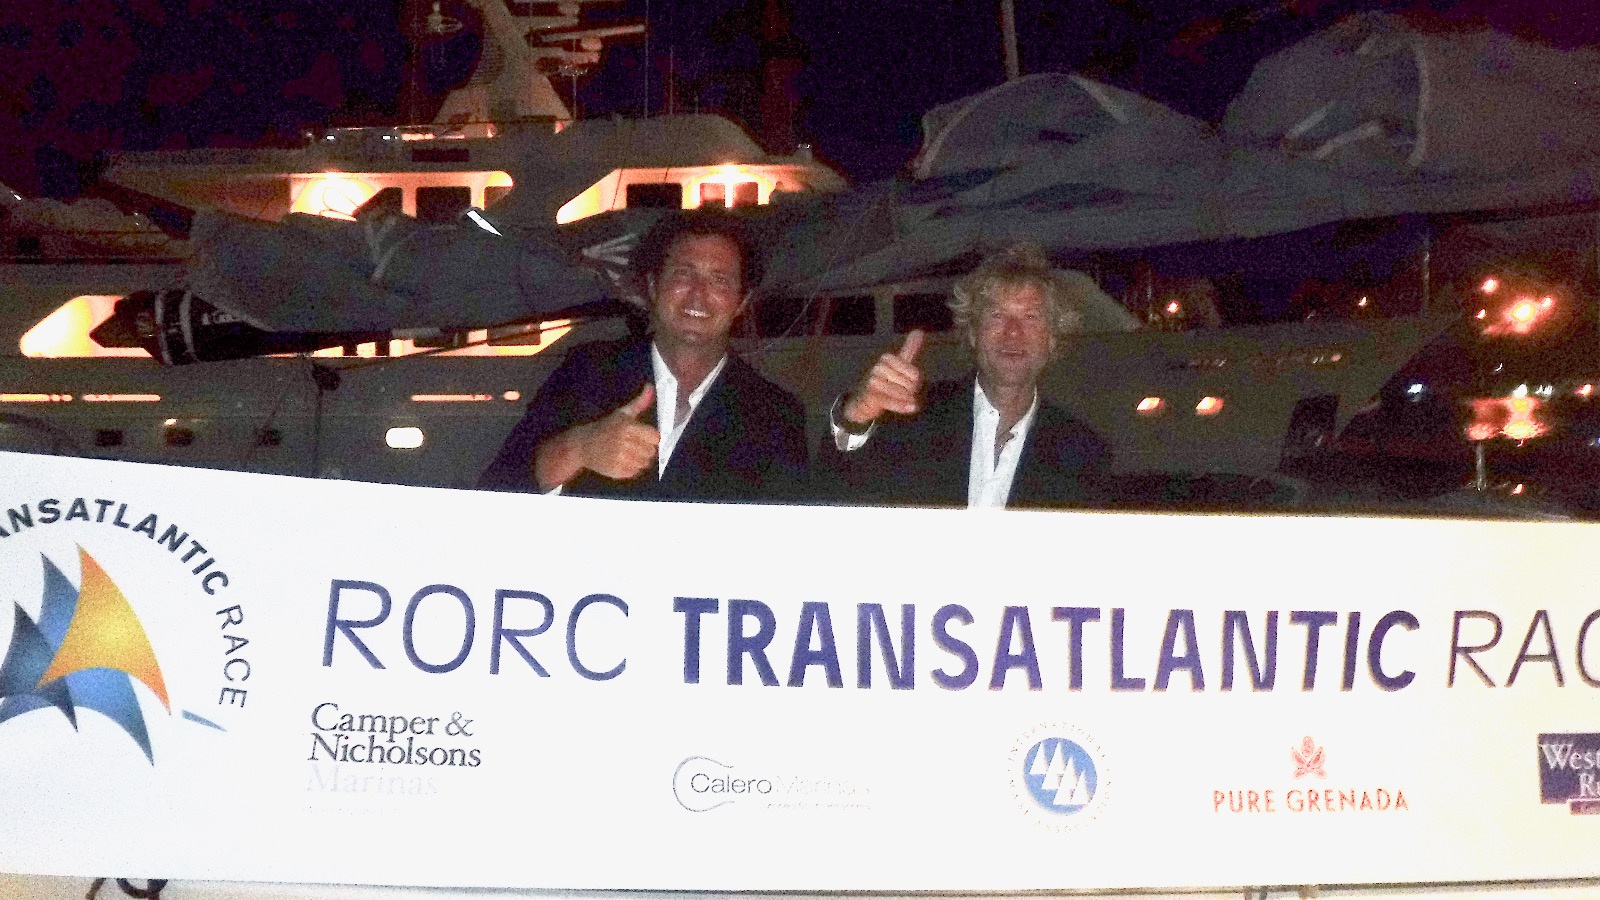 James Heald and Ben Harris give the RORC Transatlantic Race 2016 the thumbs up. Photo: RORC/Louay Habib